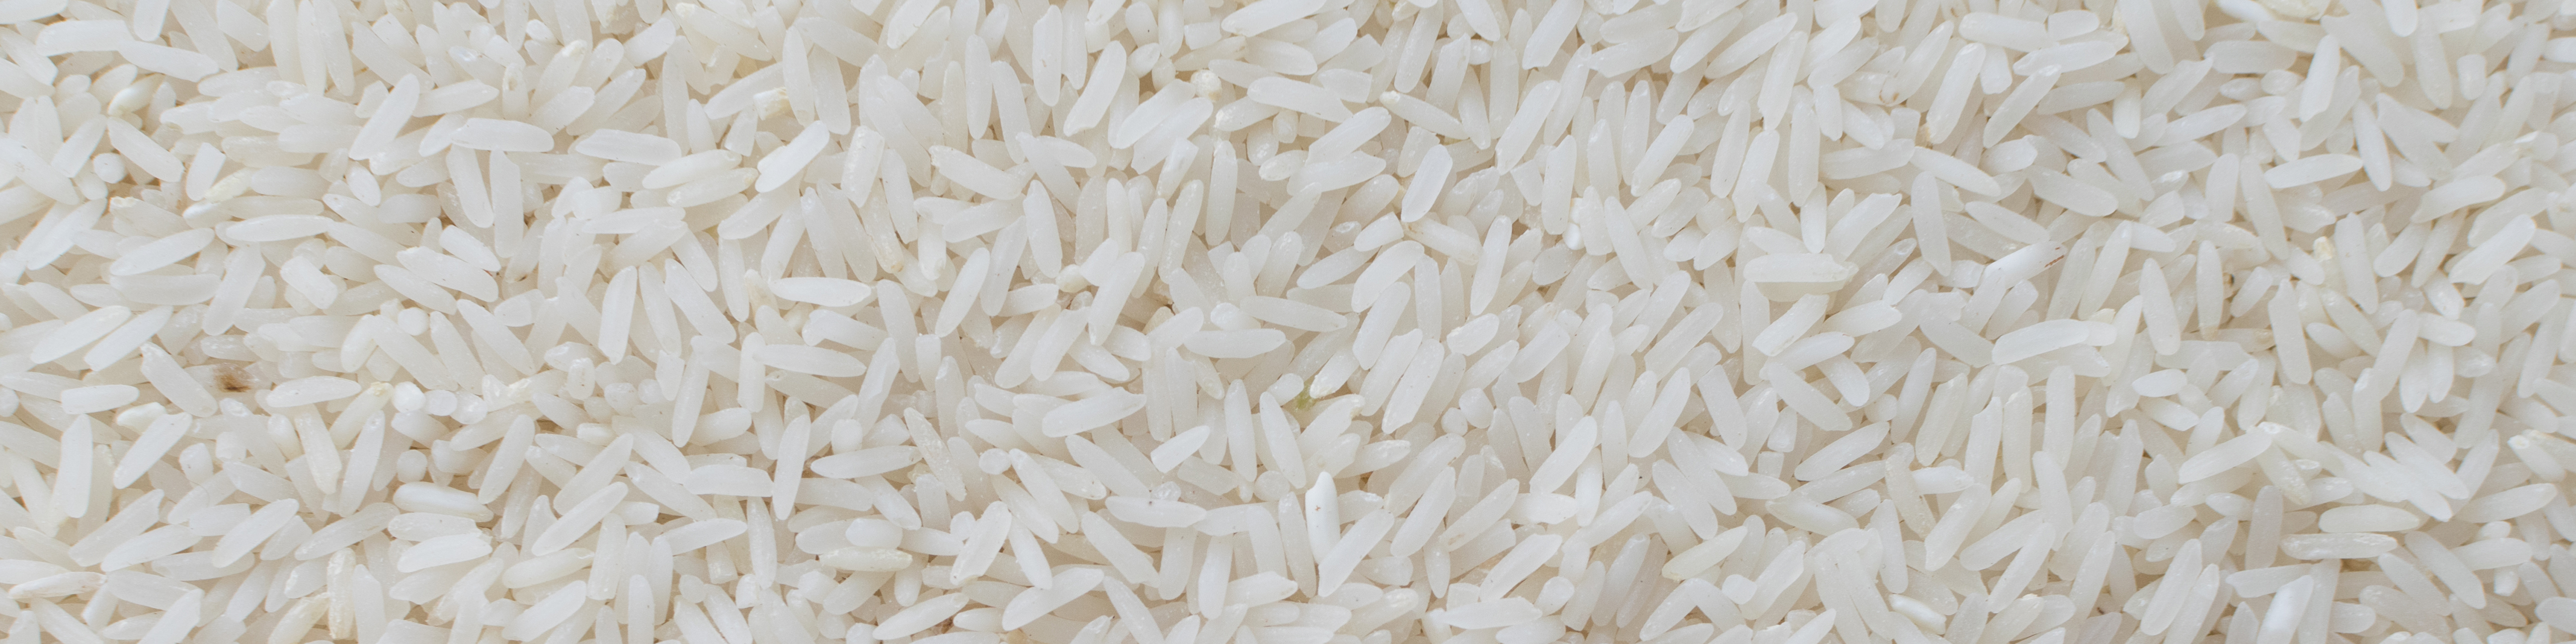 Closeup of jasmine rice - stock photo